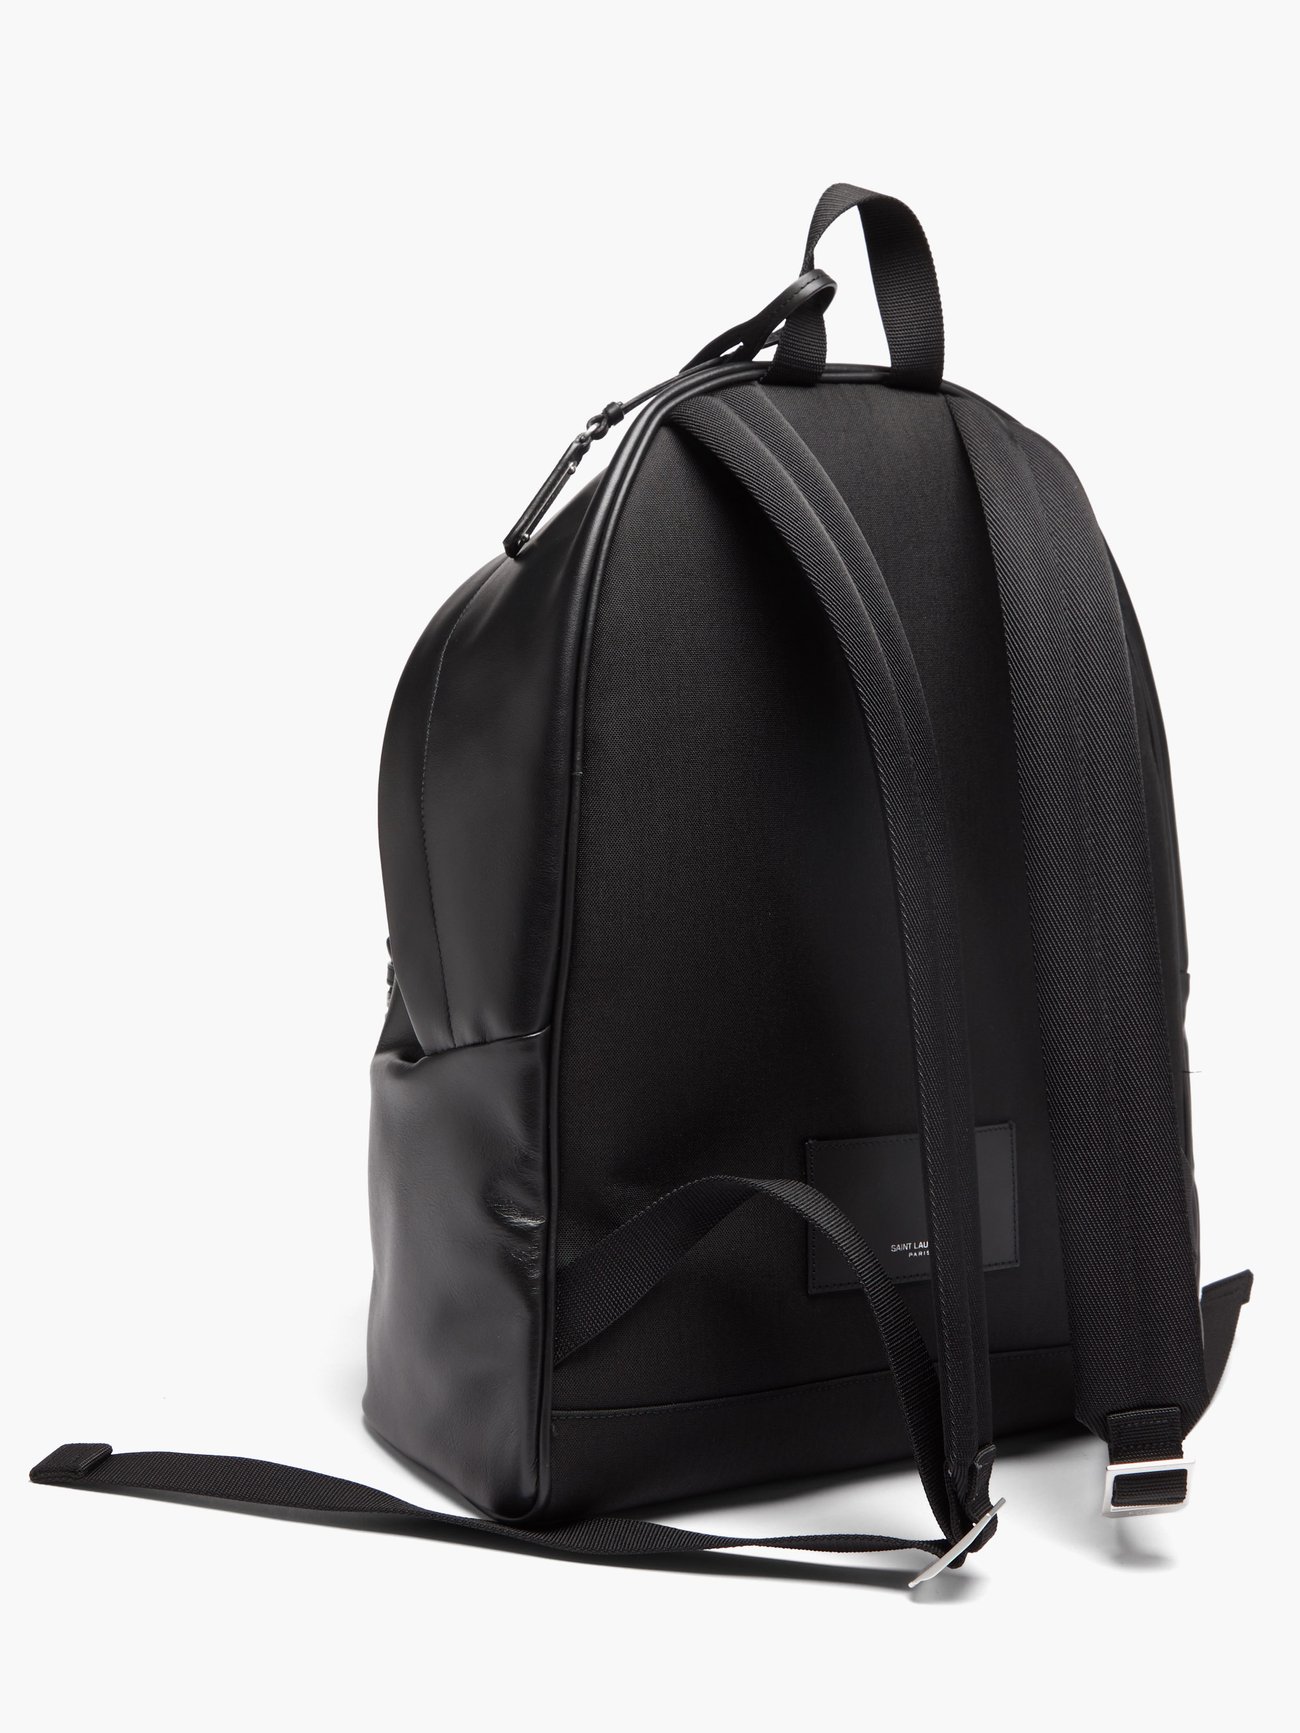 Saint Laurent City Leather Backpack - Farfetch  Leather backpack, Leather, Black  leather backpack